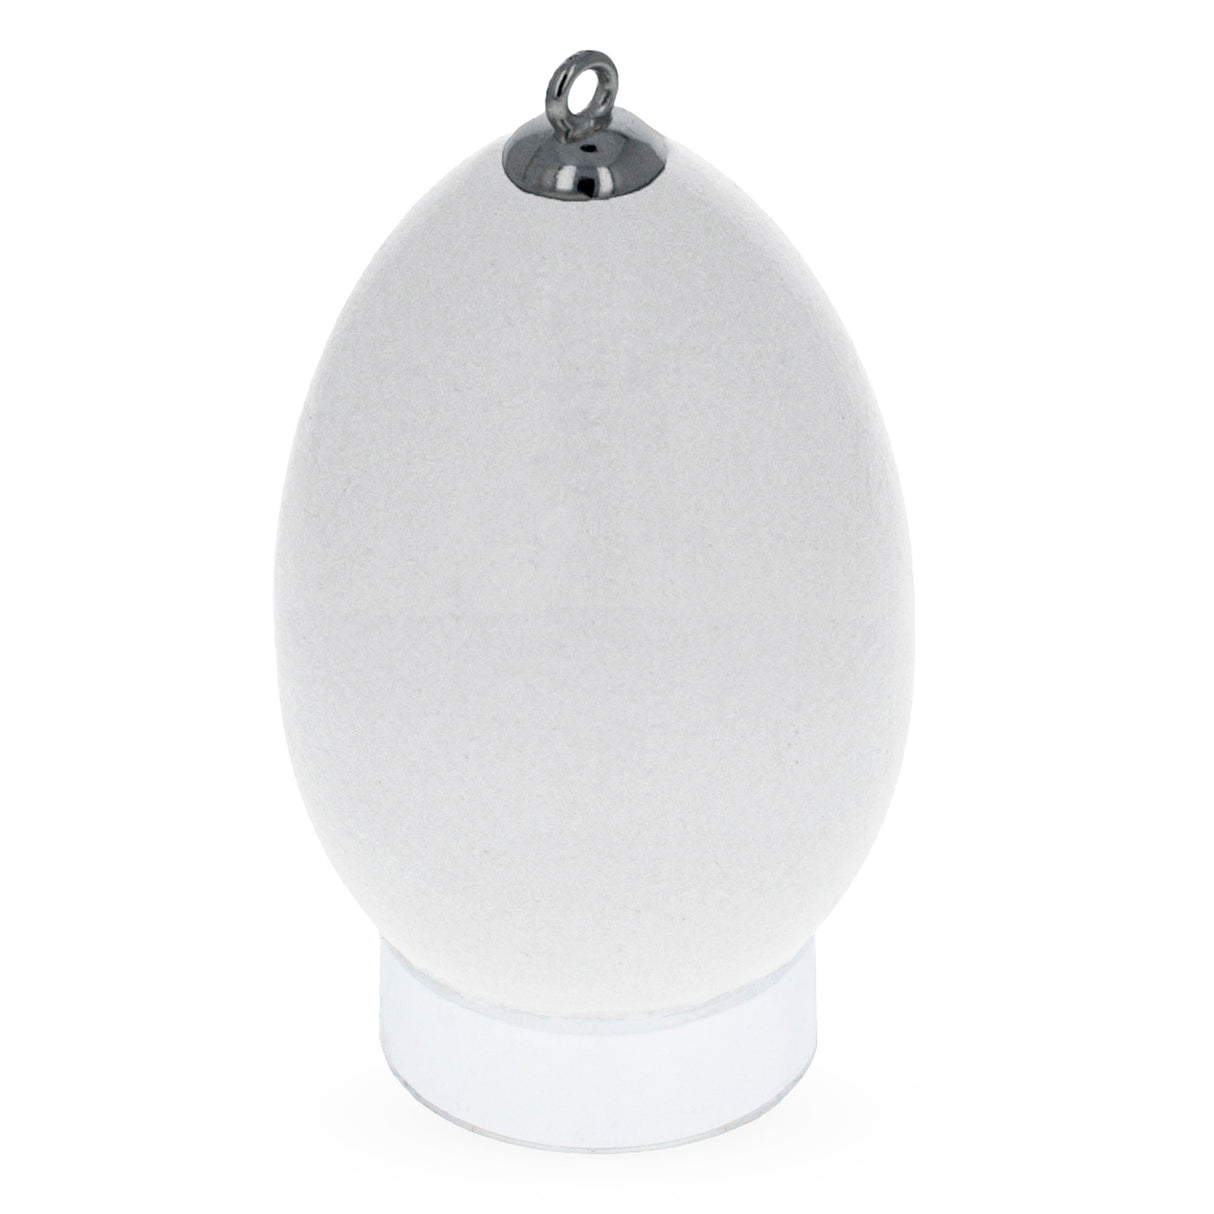 24 Silver Metal Ornament Caps - Egg Top Findings End Caps